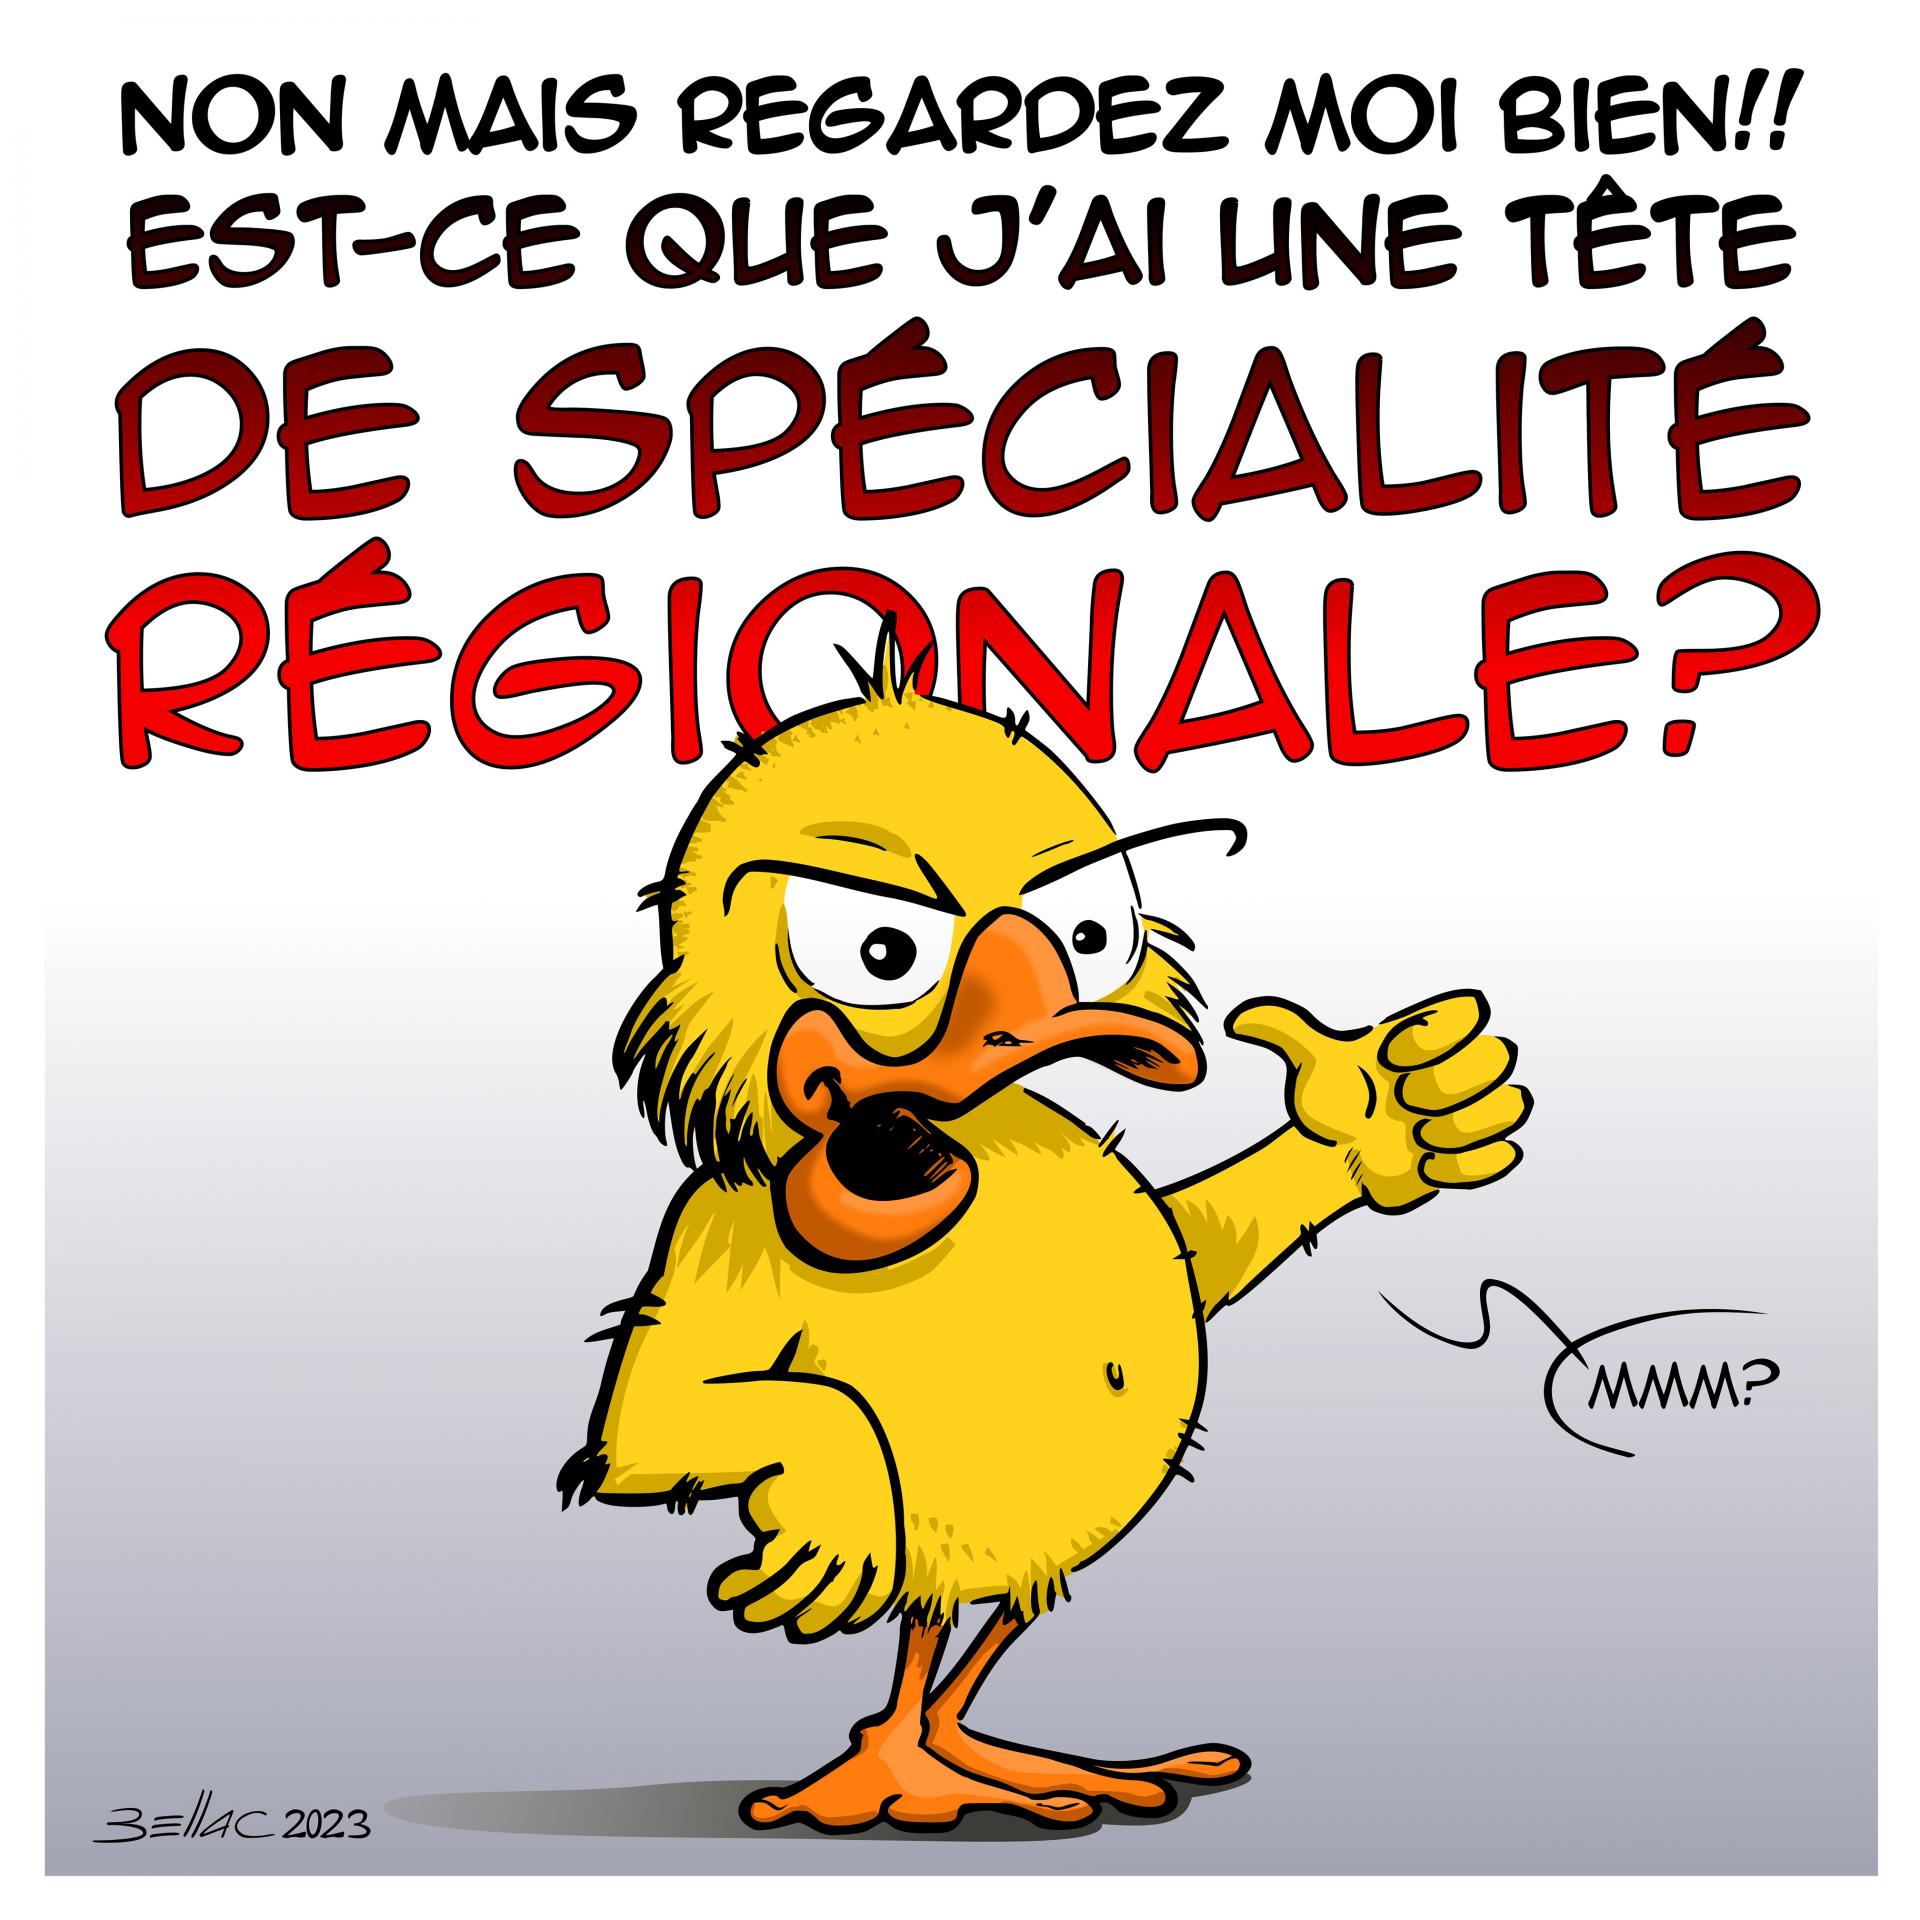 Specialite regionale